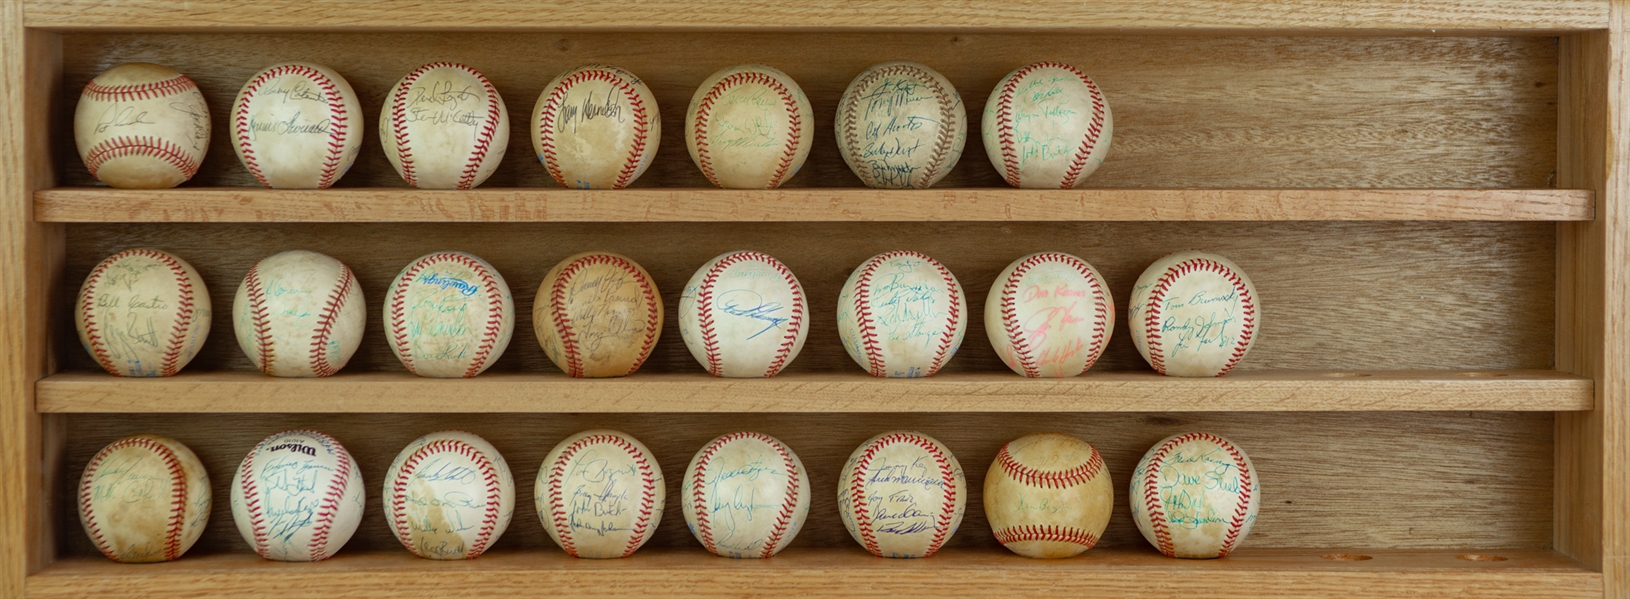 1970s-2000s Signed Baseball Collection - Lot of 73 w/ George Brett, Nolan Ryan, Warren Spahn & More (JSA)